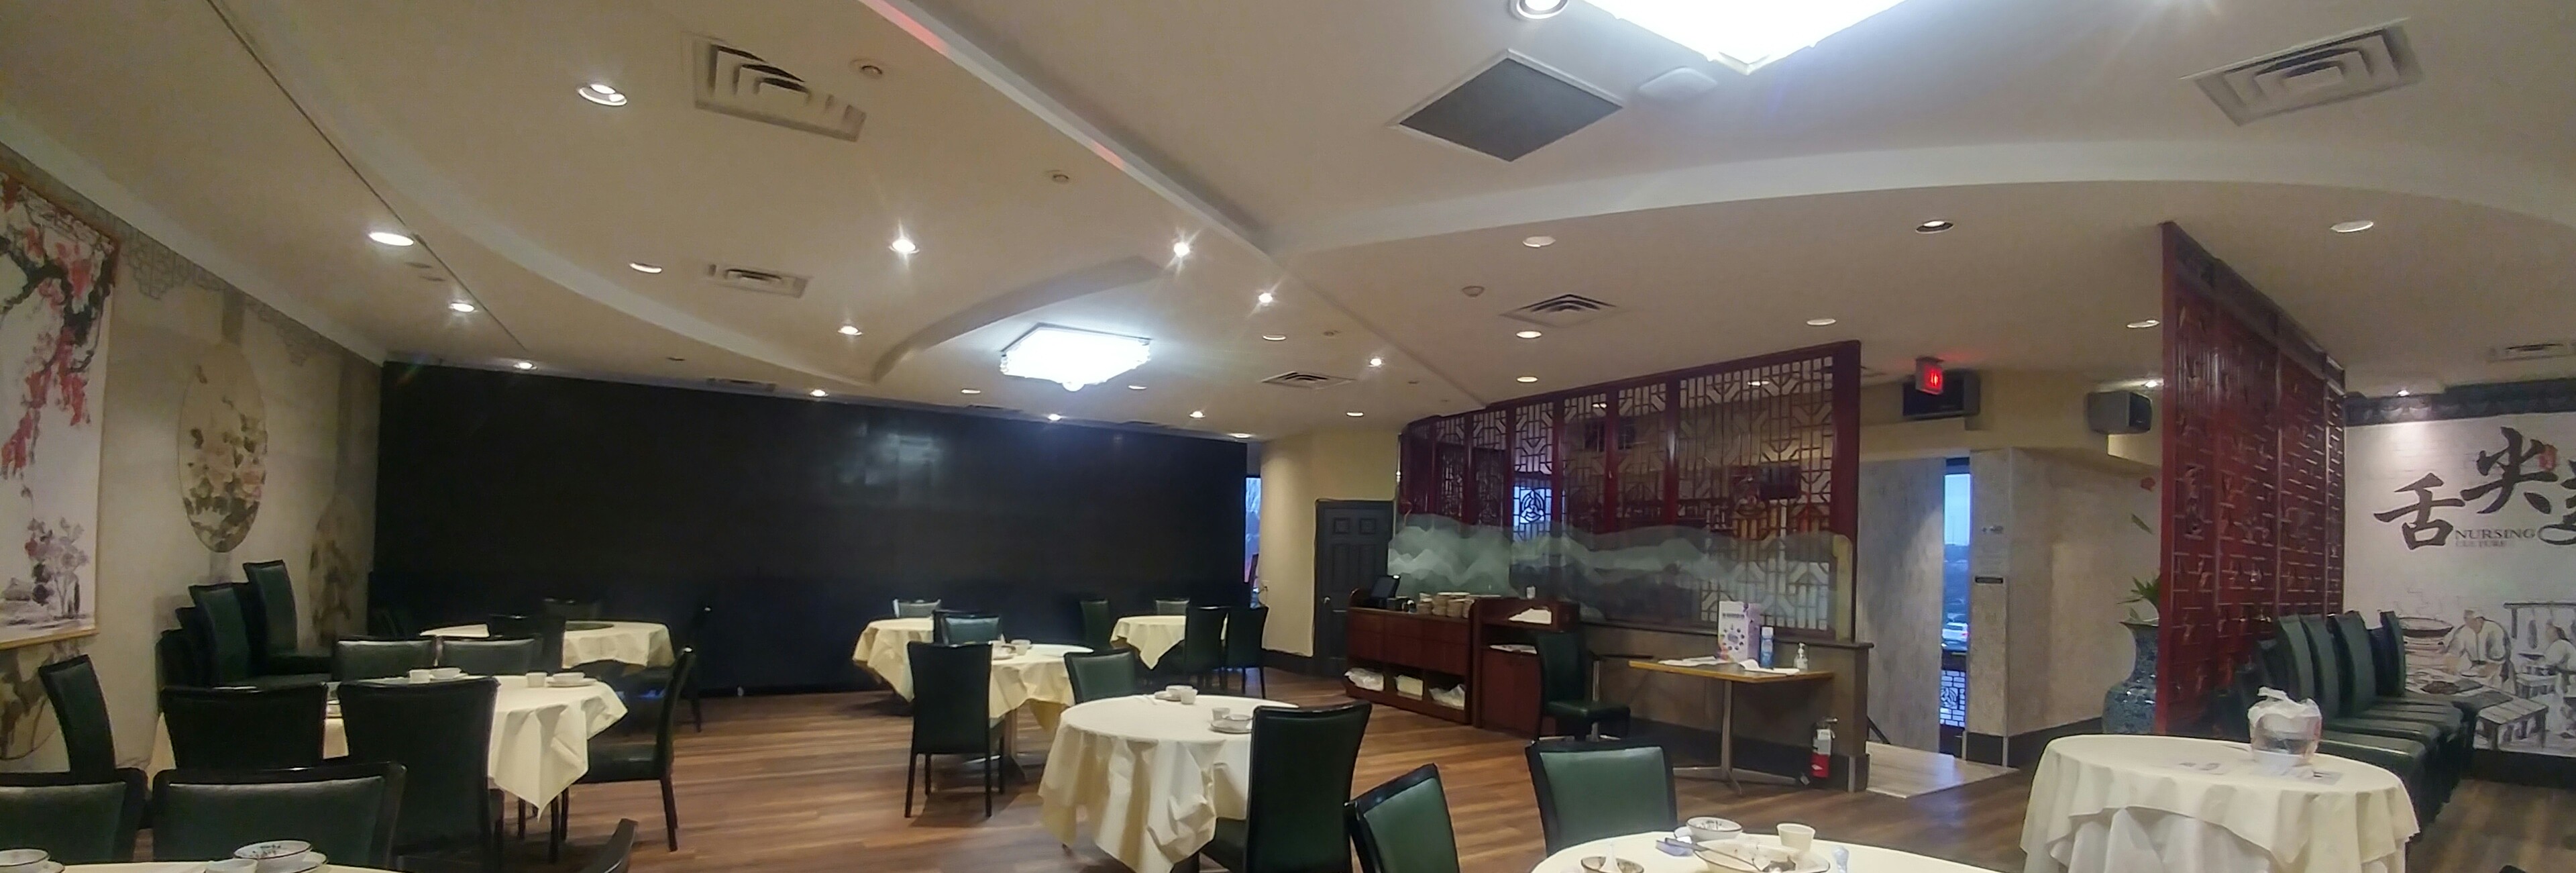 Marine Bay Restaurant 川湘港 -  Richmond